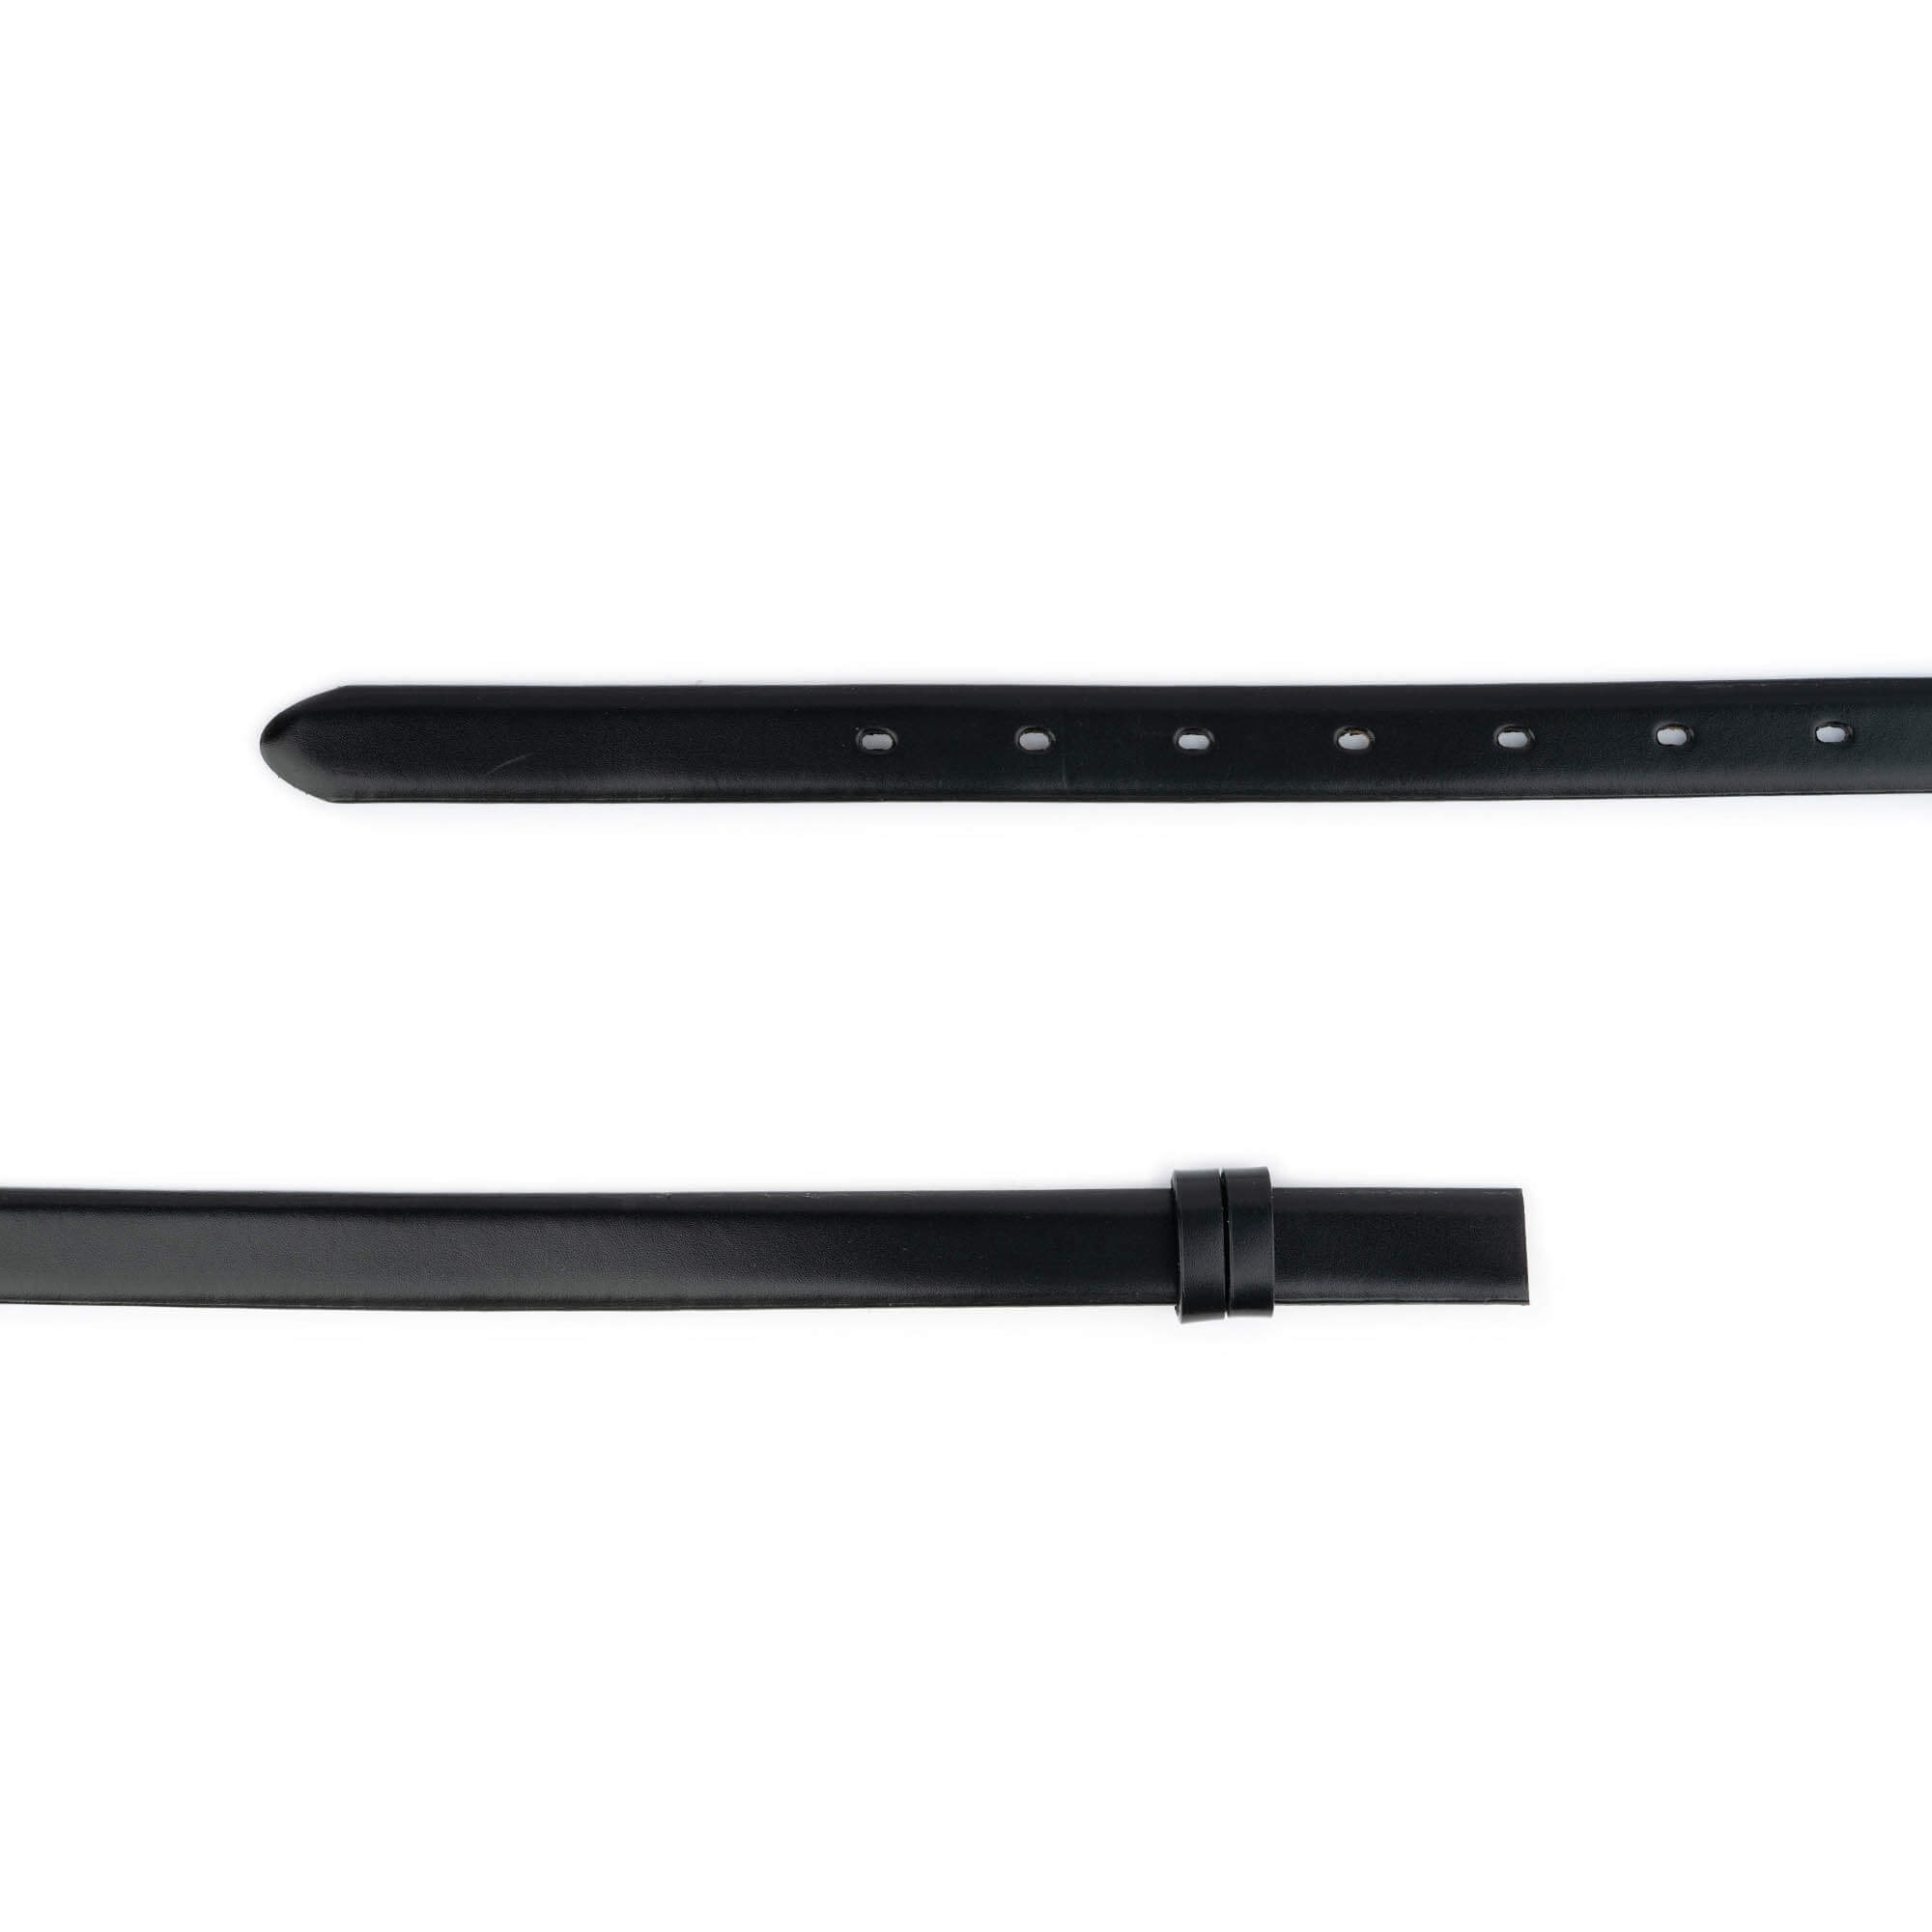 Buy Black Thin Leather Belt Strap Replacement - LeatherBeltsOnline.com